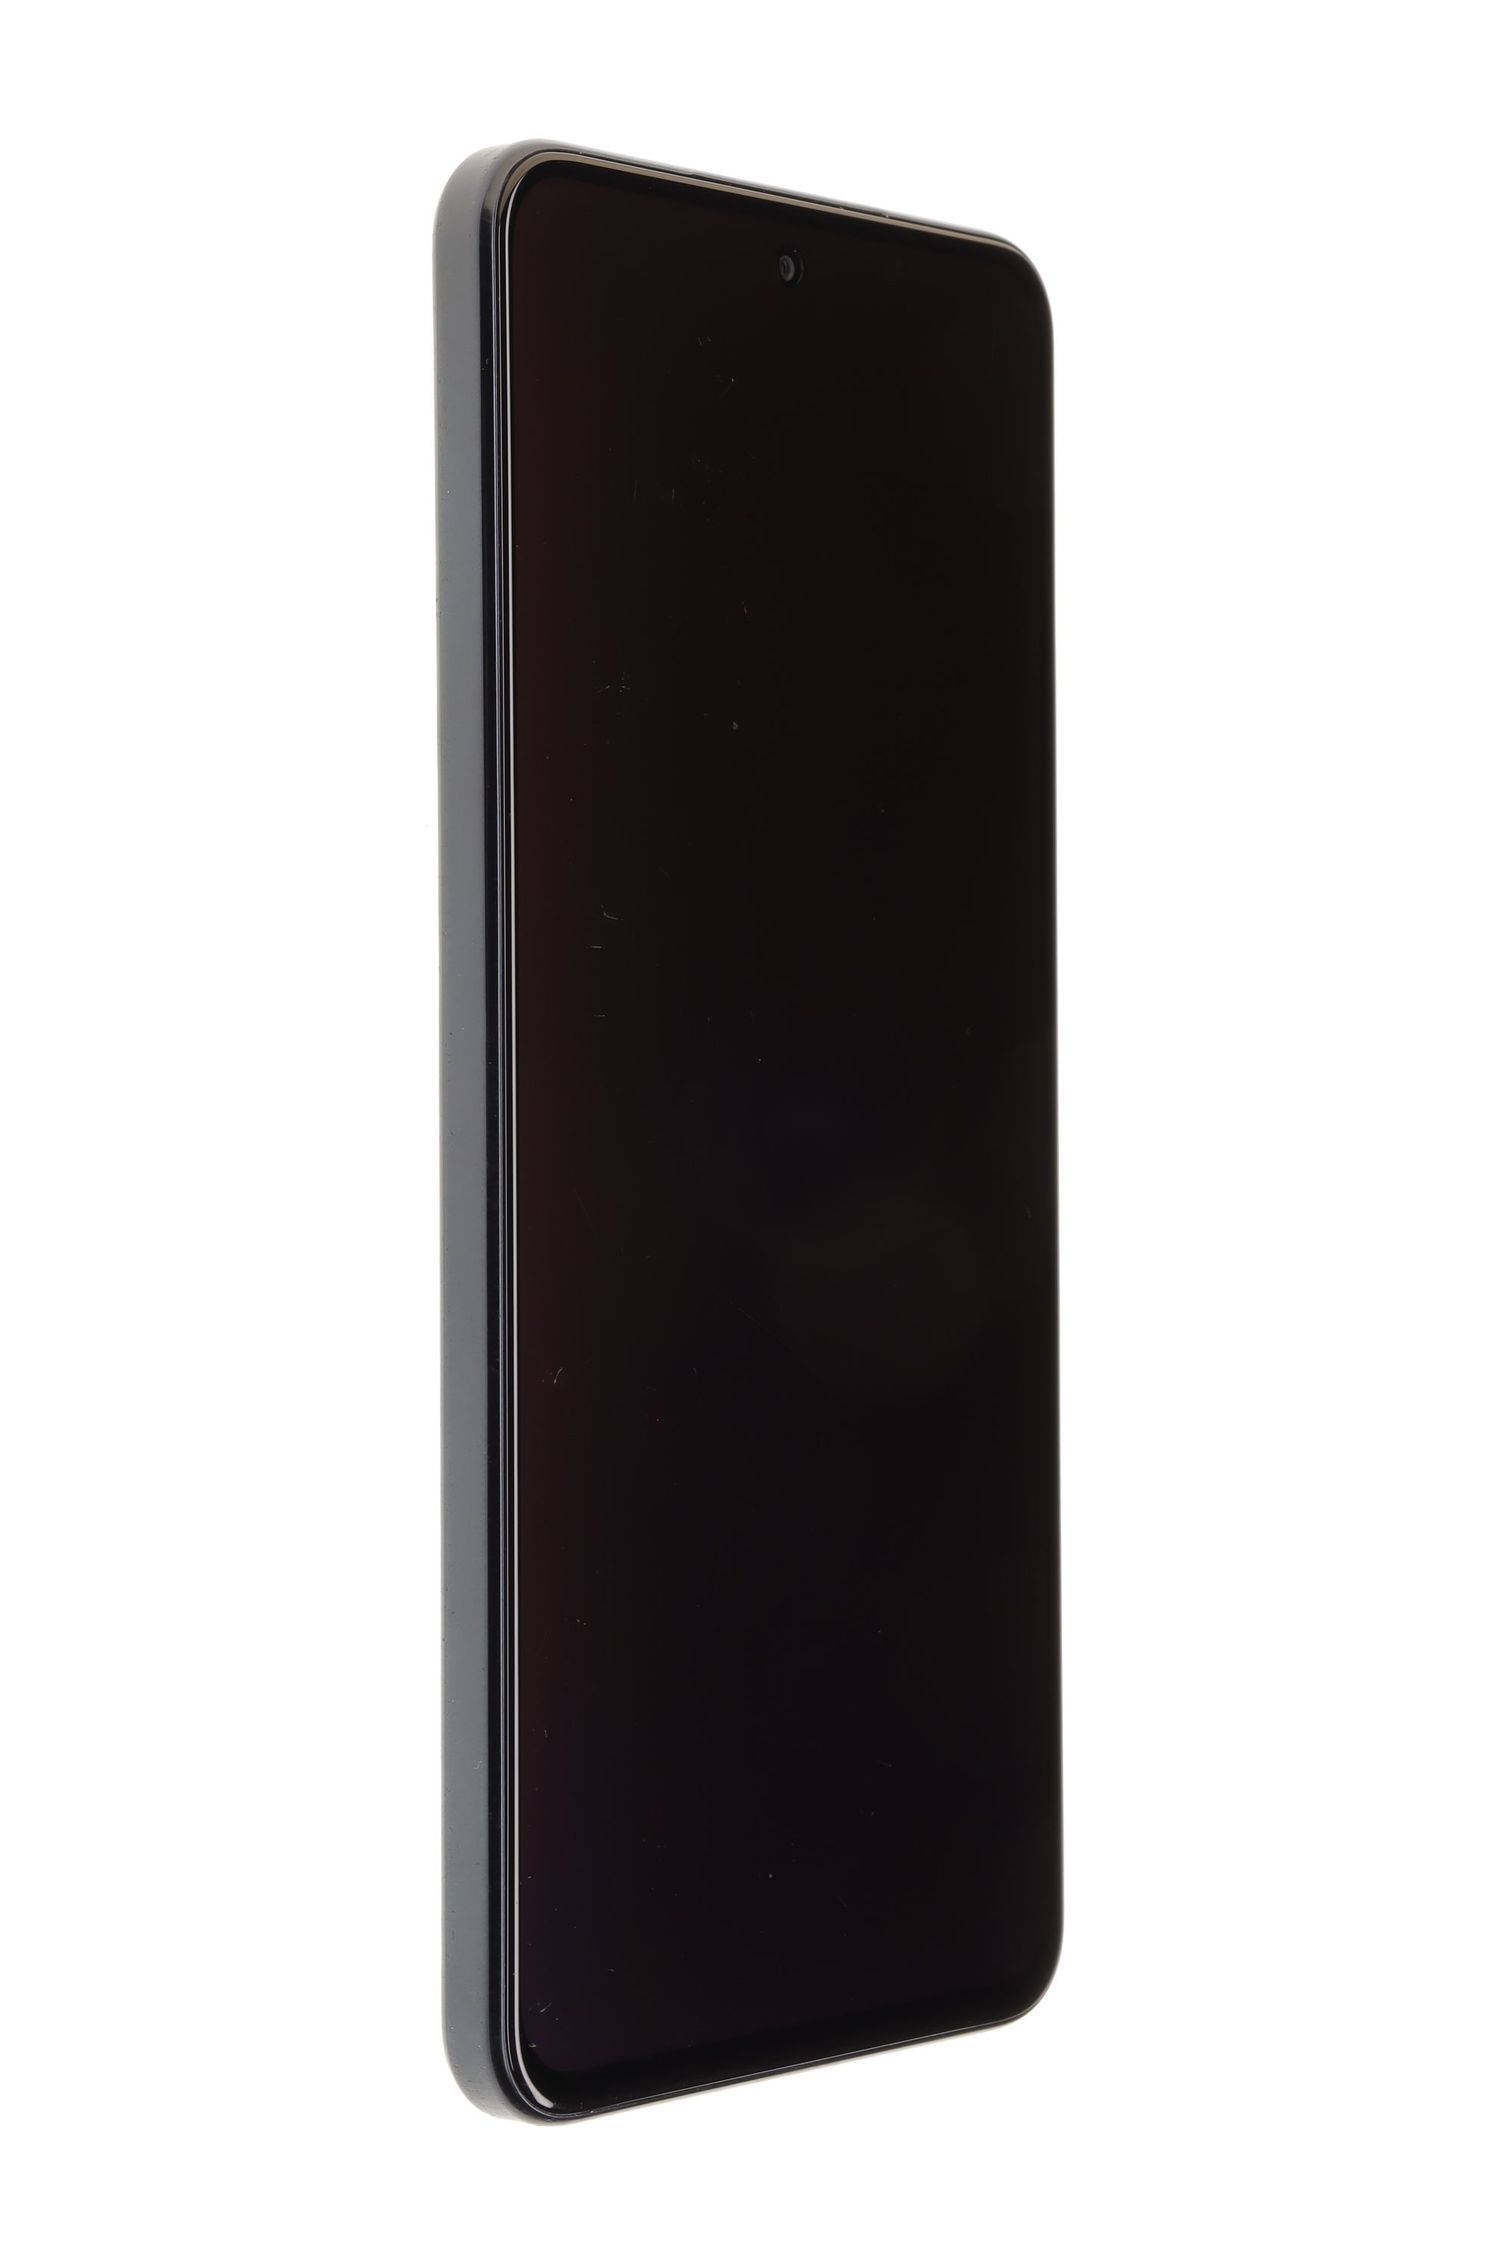 Mobiltelefon Huawei Nova 10 SE Dual Sim, Starry Black, 128 GB, Foarte Bun